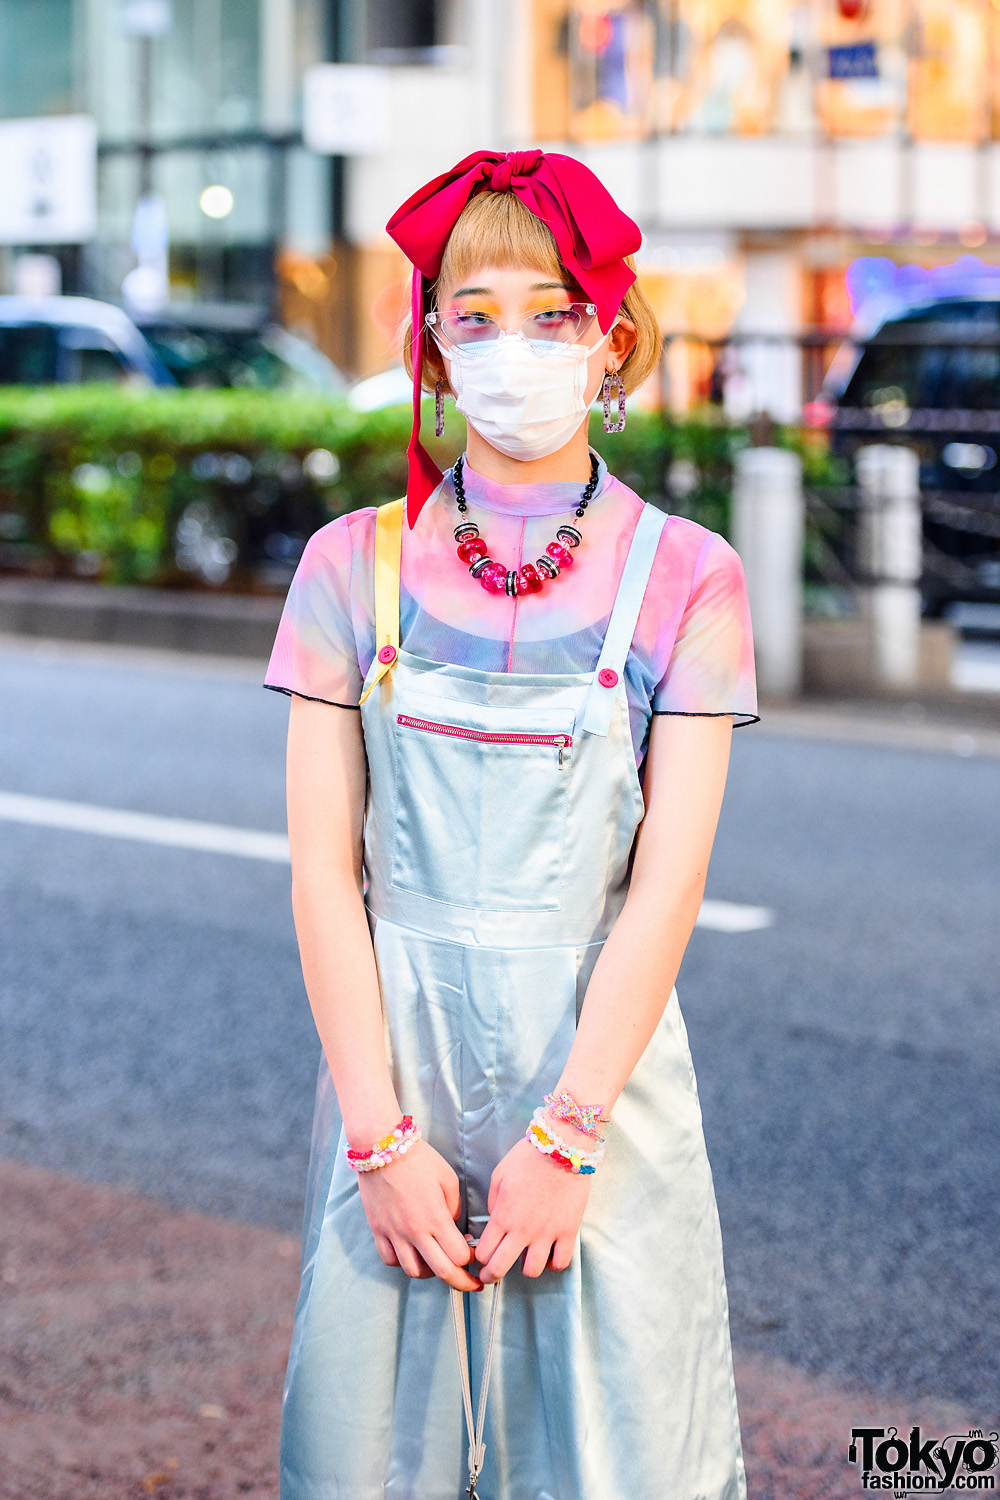 Japanese Teen Model in Tokyo w/ Red Hair Bow, Cat Eye Glasses, Scai ...